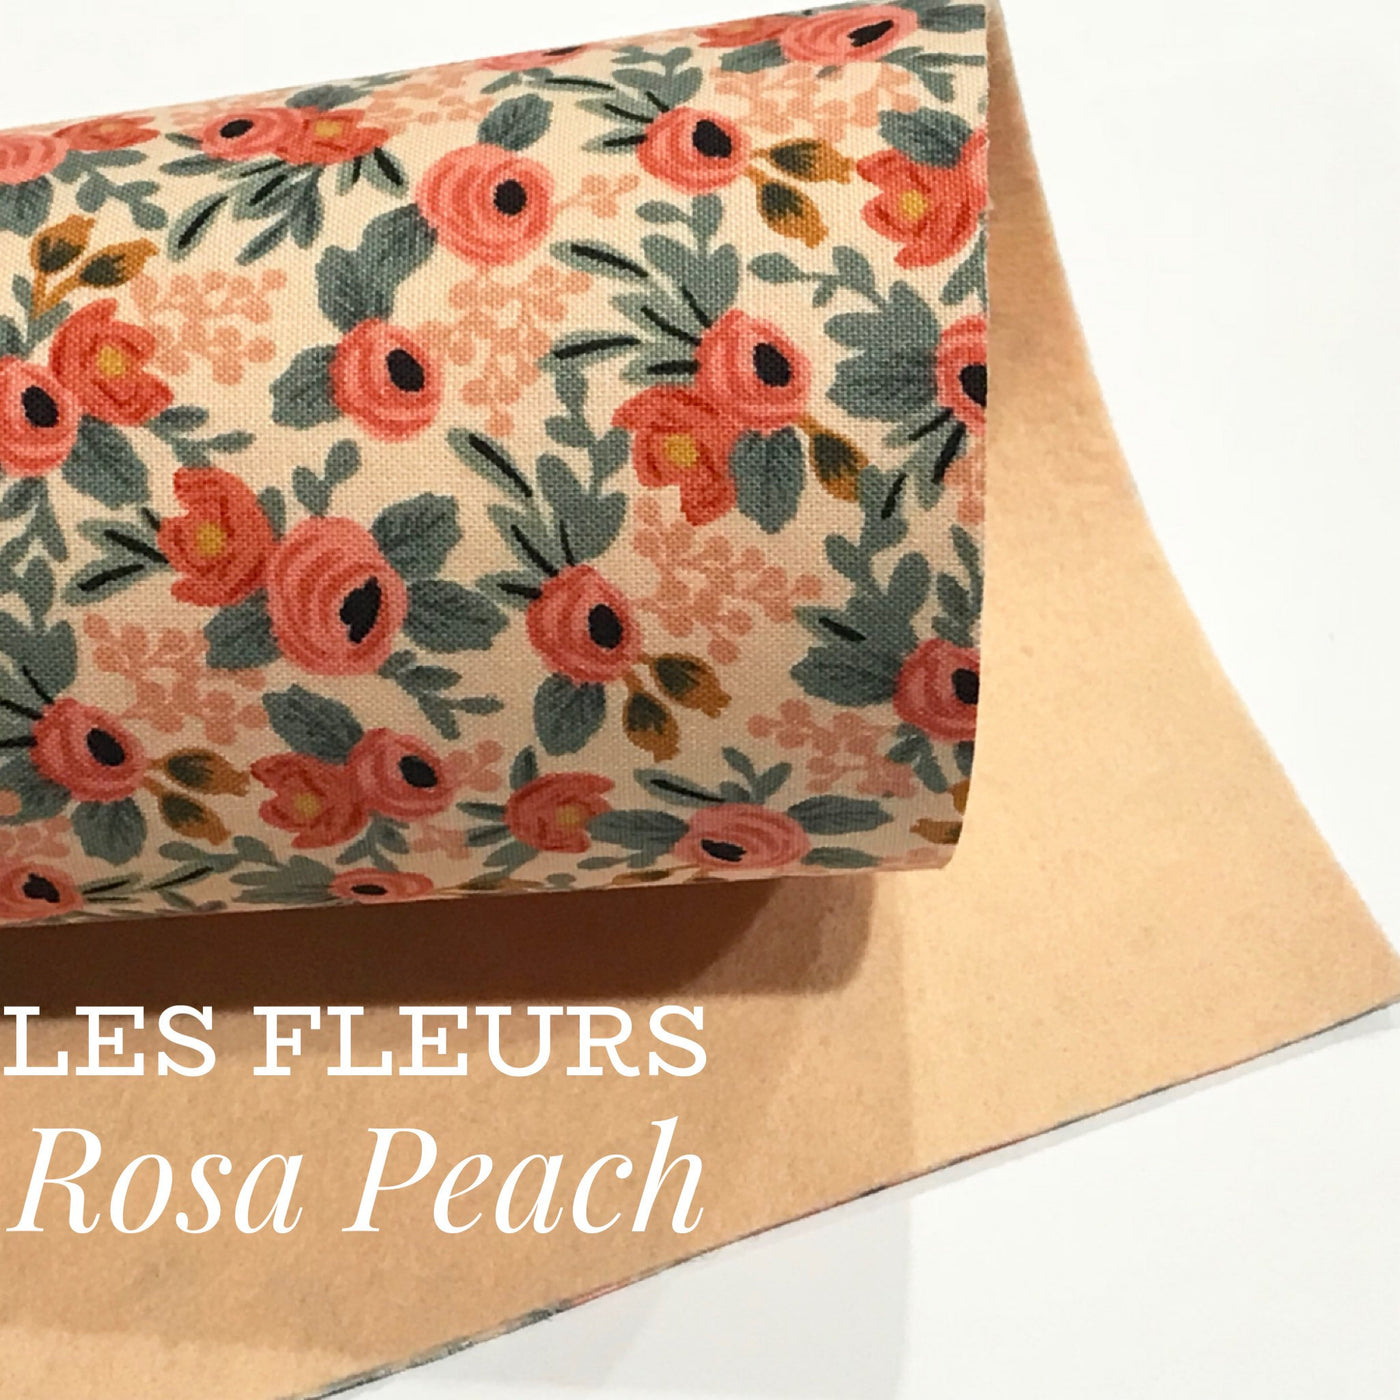 Rosa Peach - Les Fleurs Double Sided Fabric Sheets